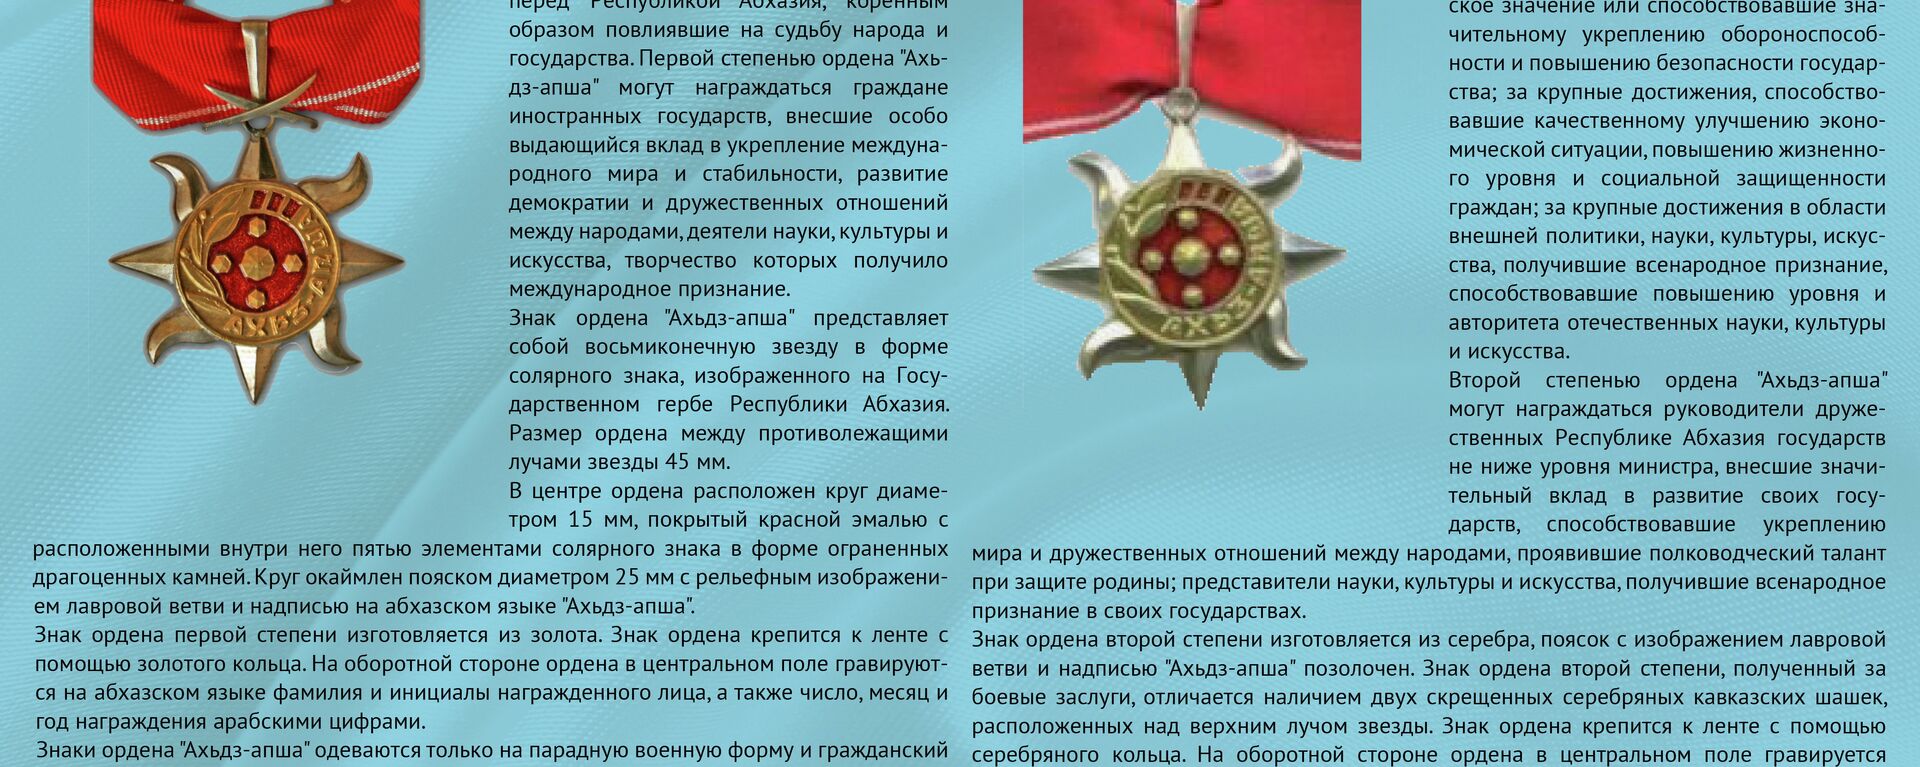 Государственные награды Абхазии - Sputnik Абхазия, 1920, 04.12.2017